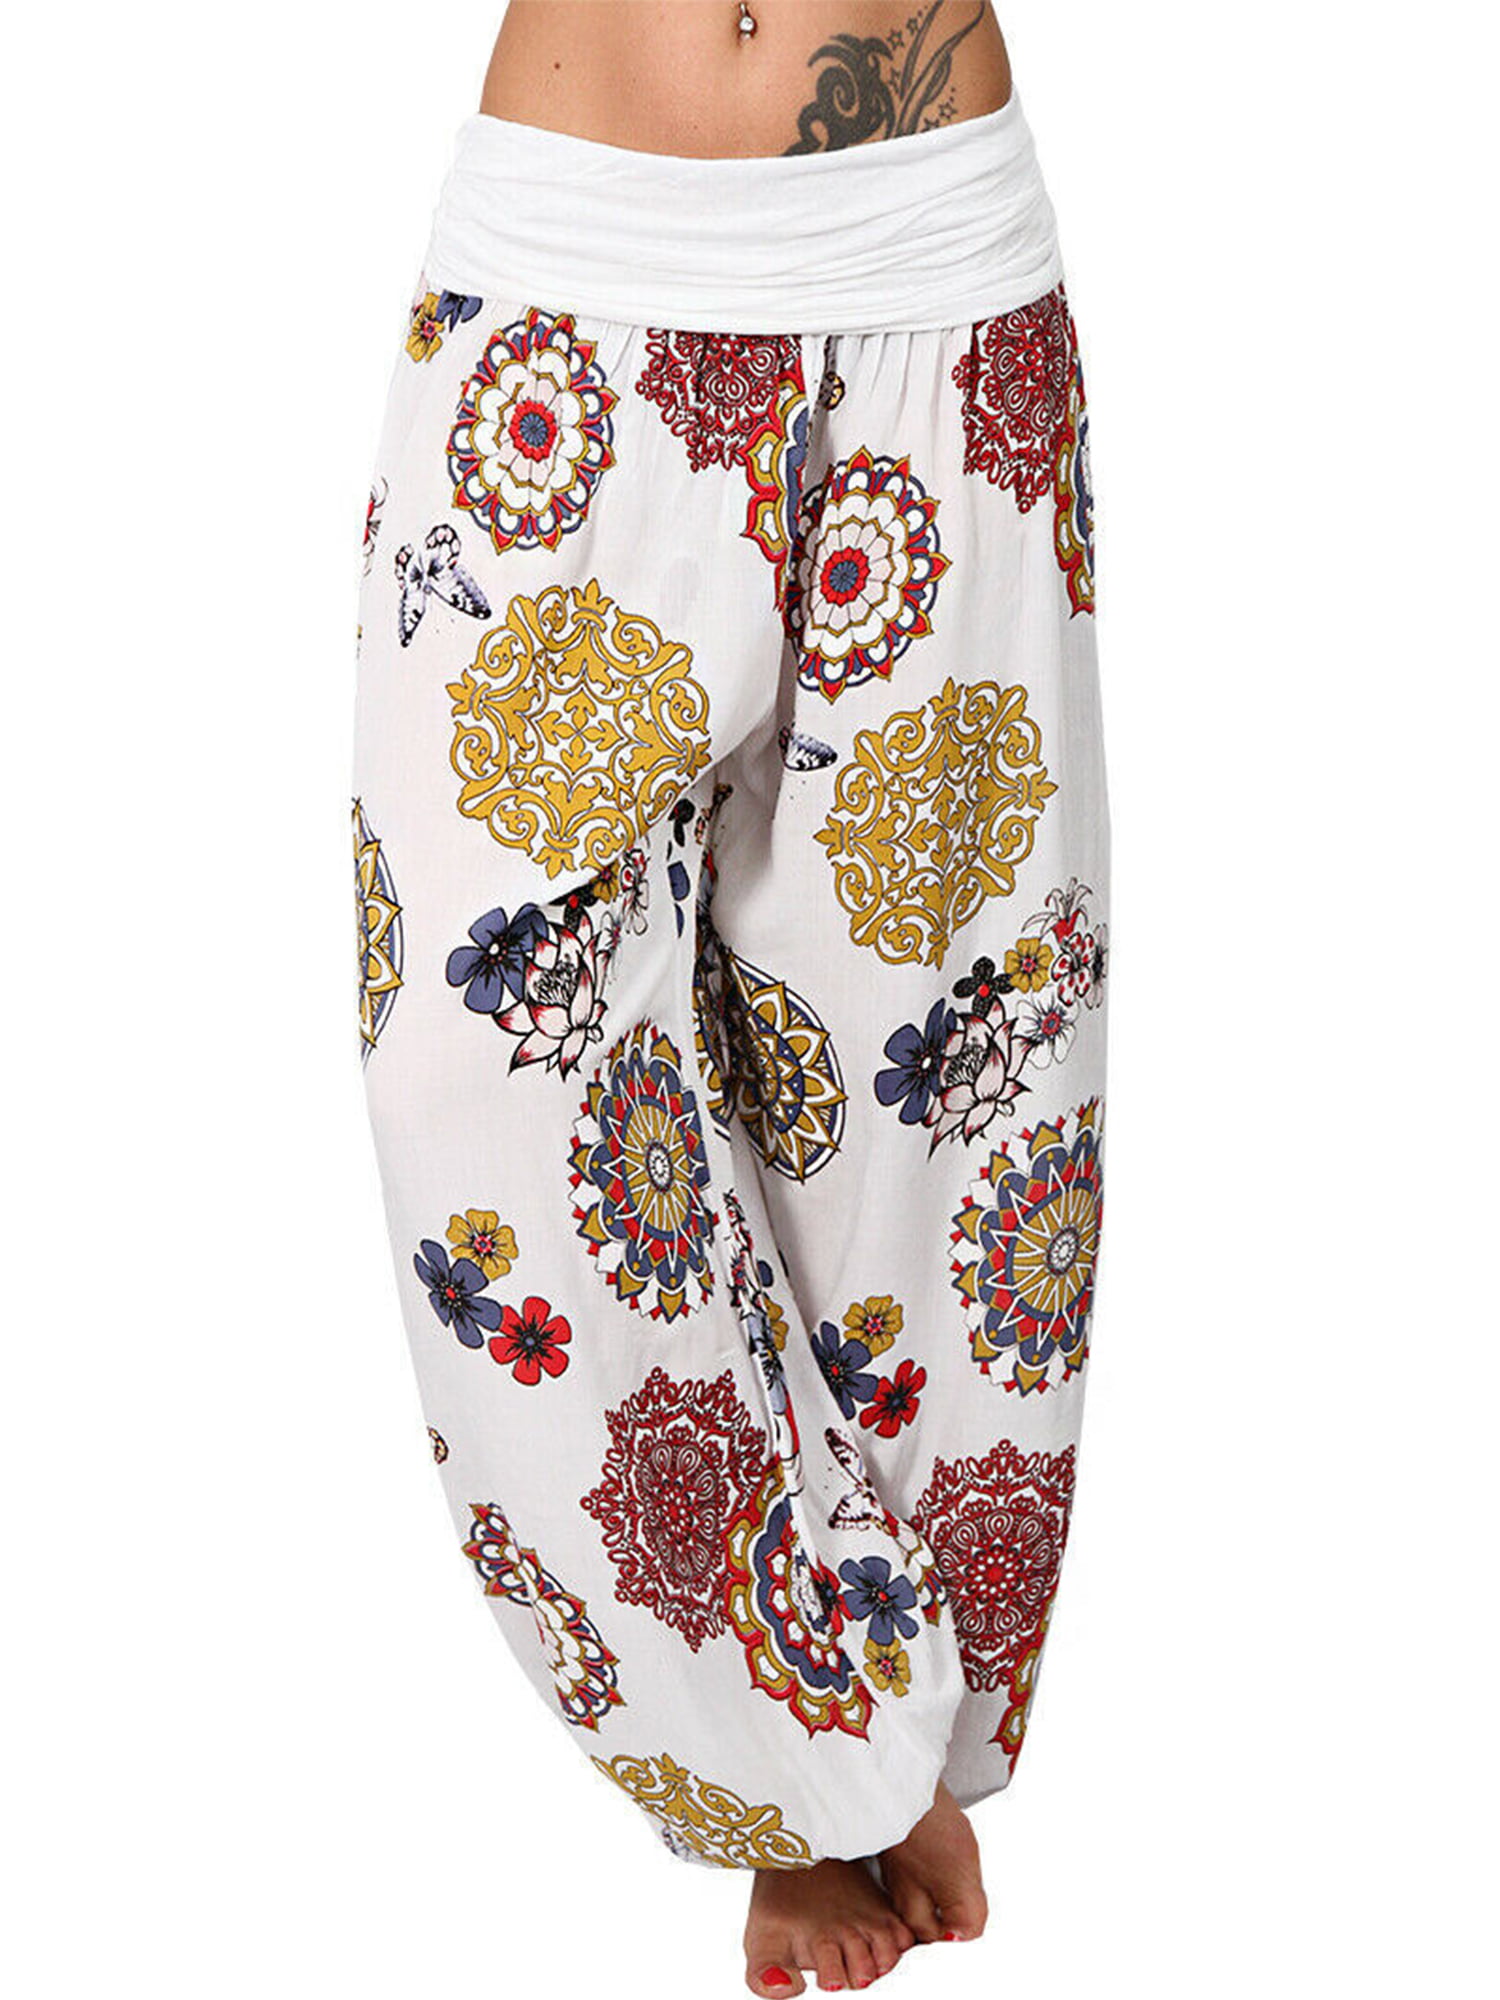 Wabtum Summer Pants for Women Casual Flowers Print Cotton Linen Pants Elastic Waist Wide Leg Cropped Pants witn Pockets